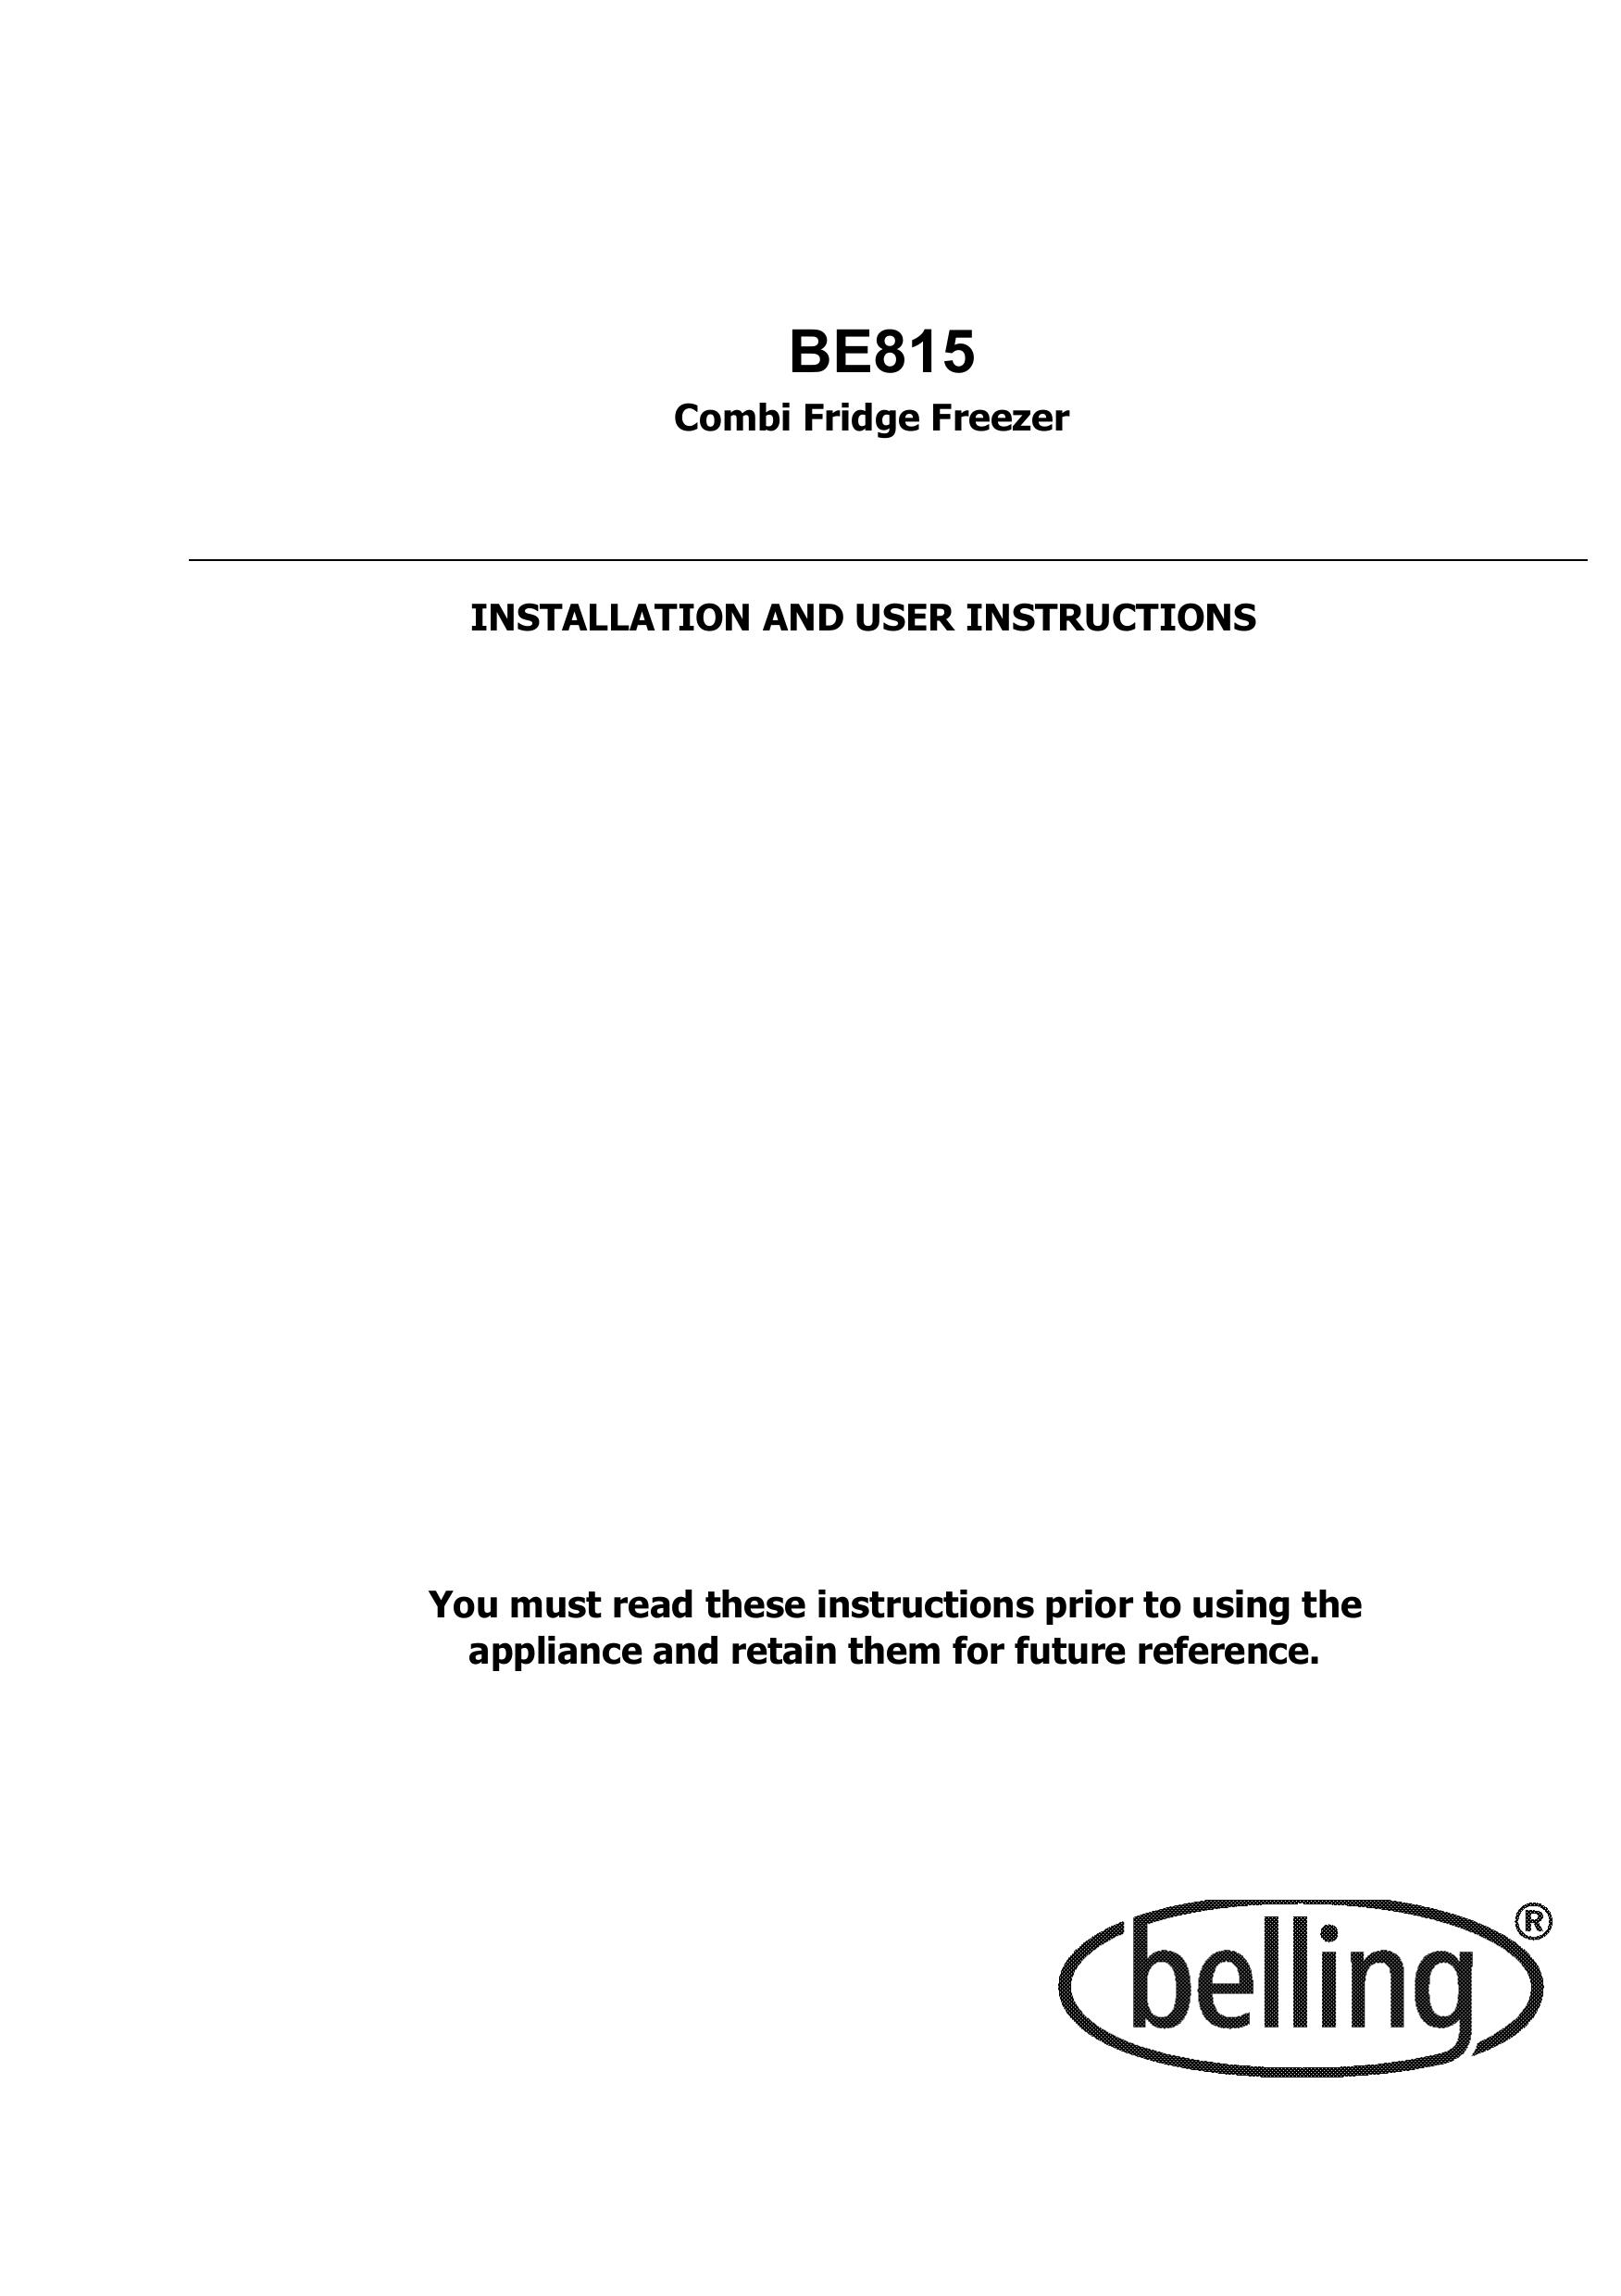 Glen Dimplex Home Appliances Ltd BE815 Refrigerator User Manual